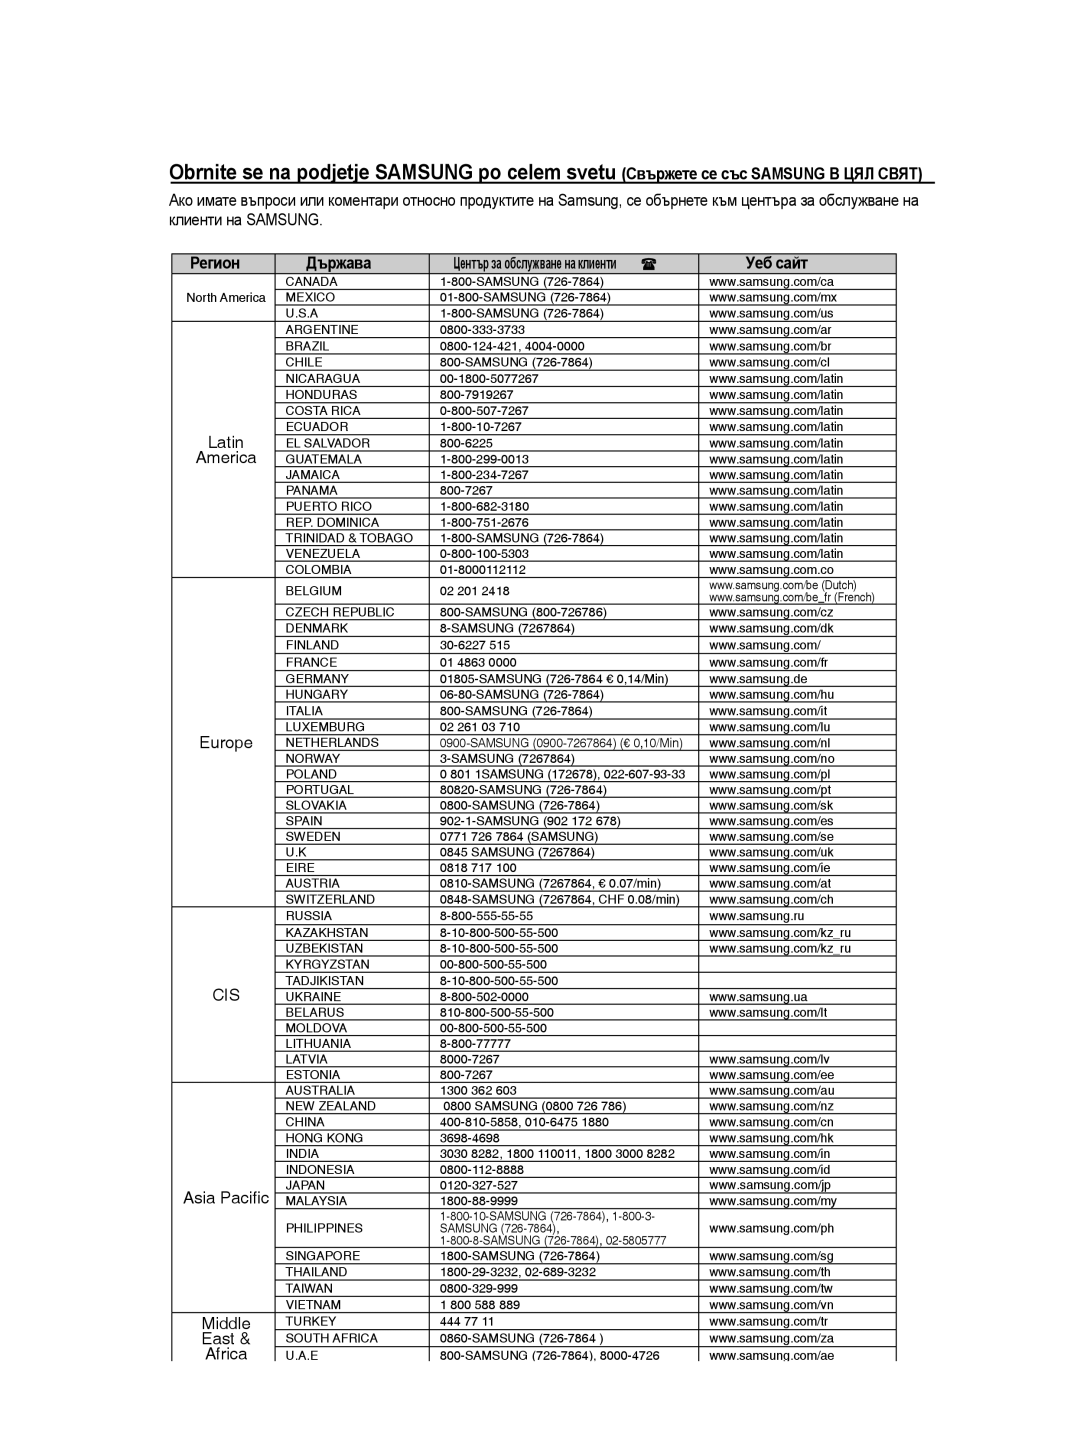 Samsung MM-C330D/EDC manual Регион, Latin America Europe CIS Asia Pacific Middle East Africa, Държава, Уеб сайт 